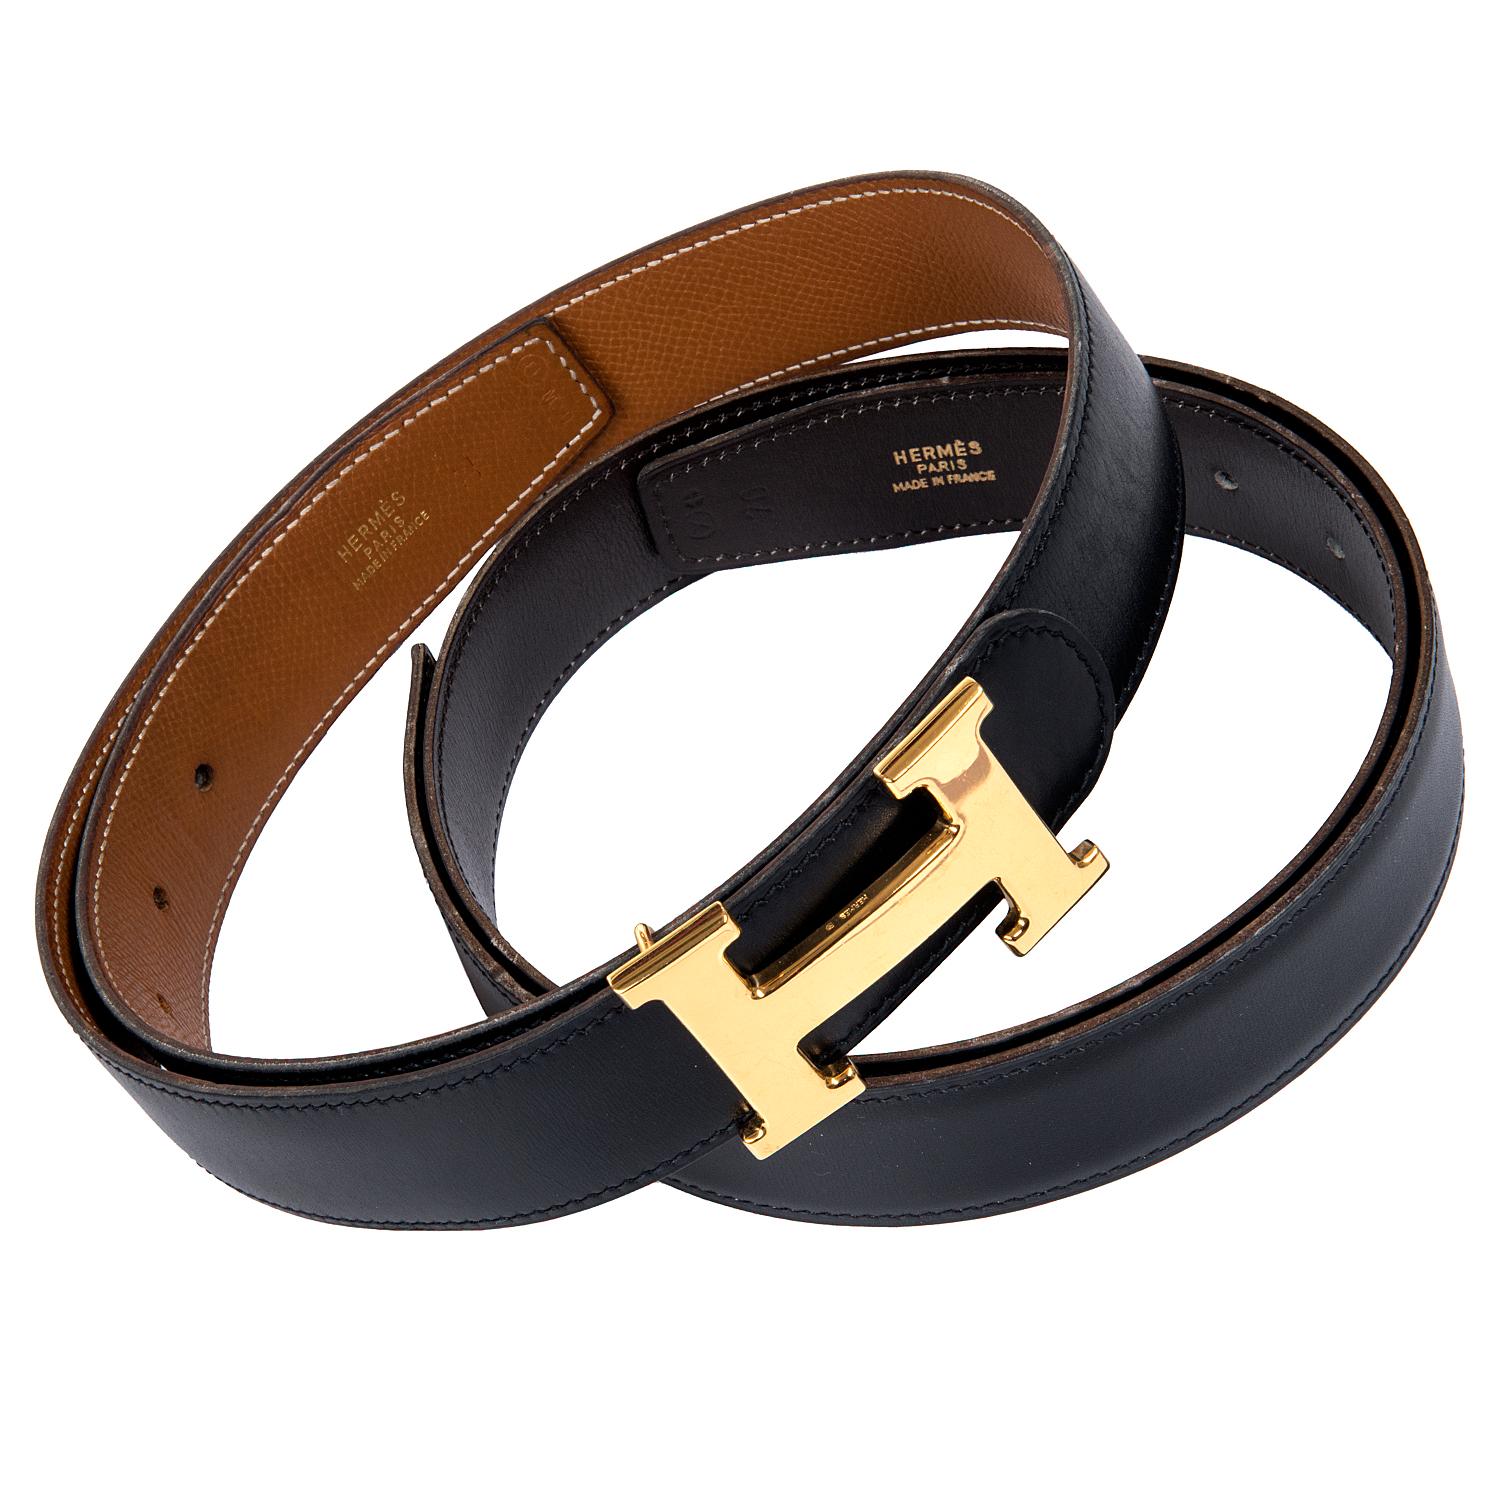 Two Hermes Reversible Vintage Belts 70cm - Tan/Black & Choc/Black Gold H Buckle